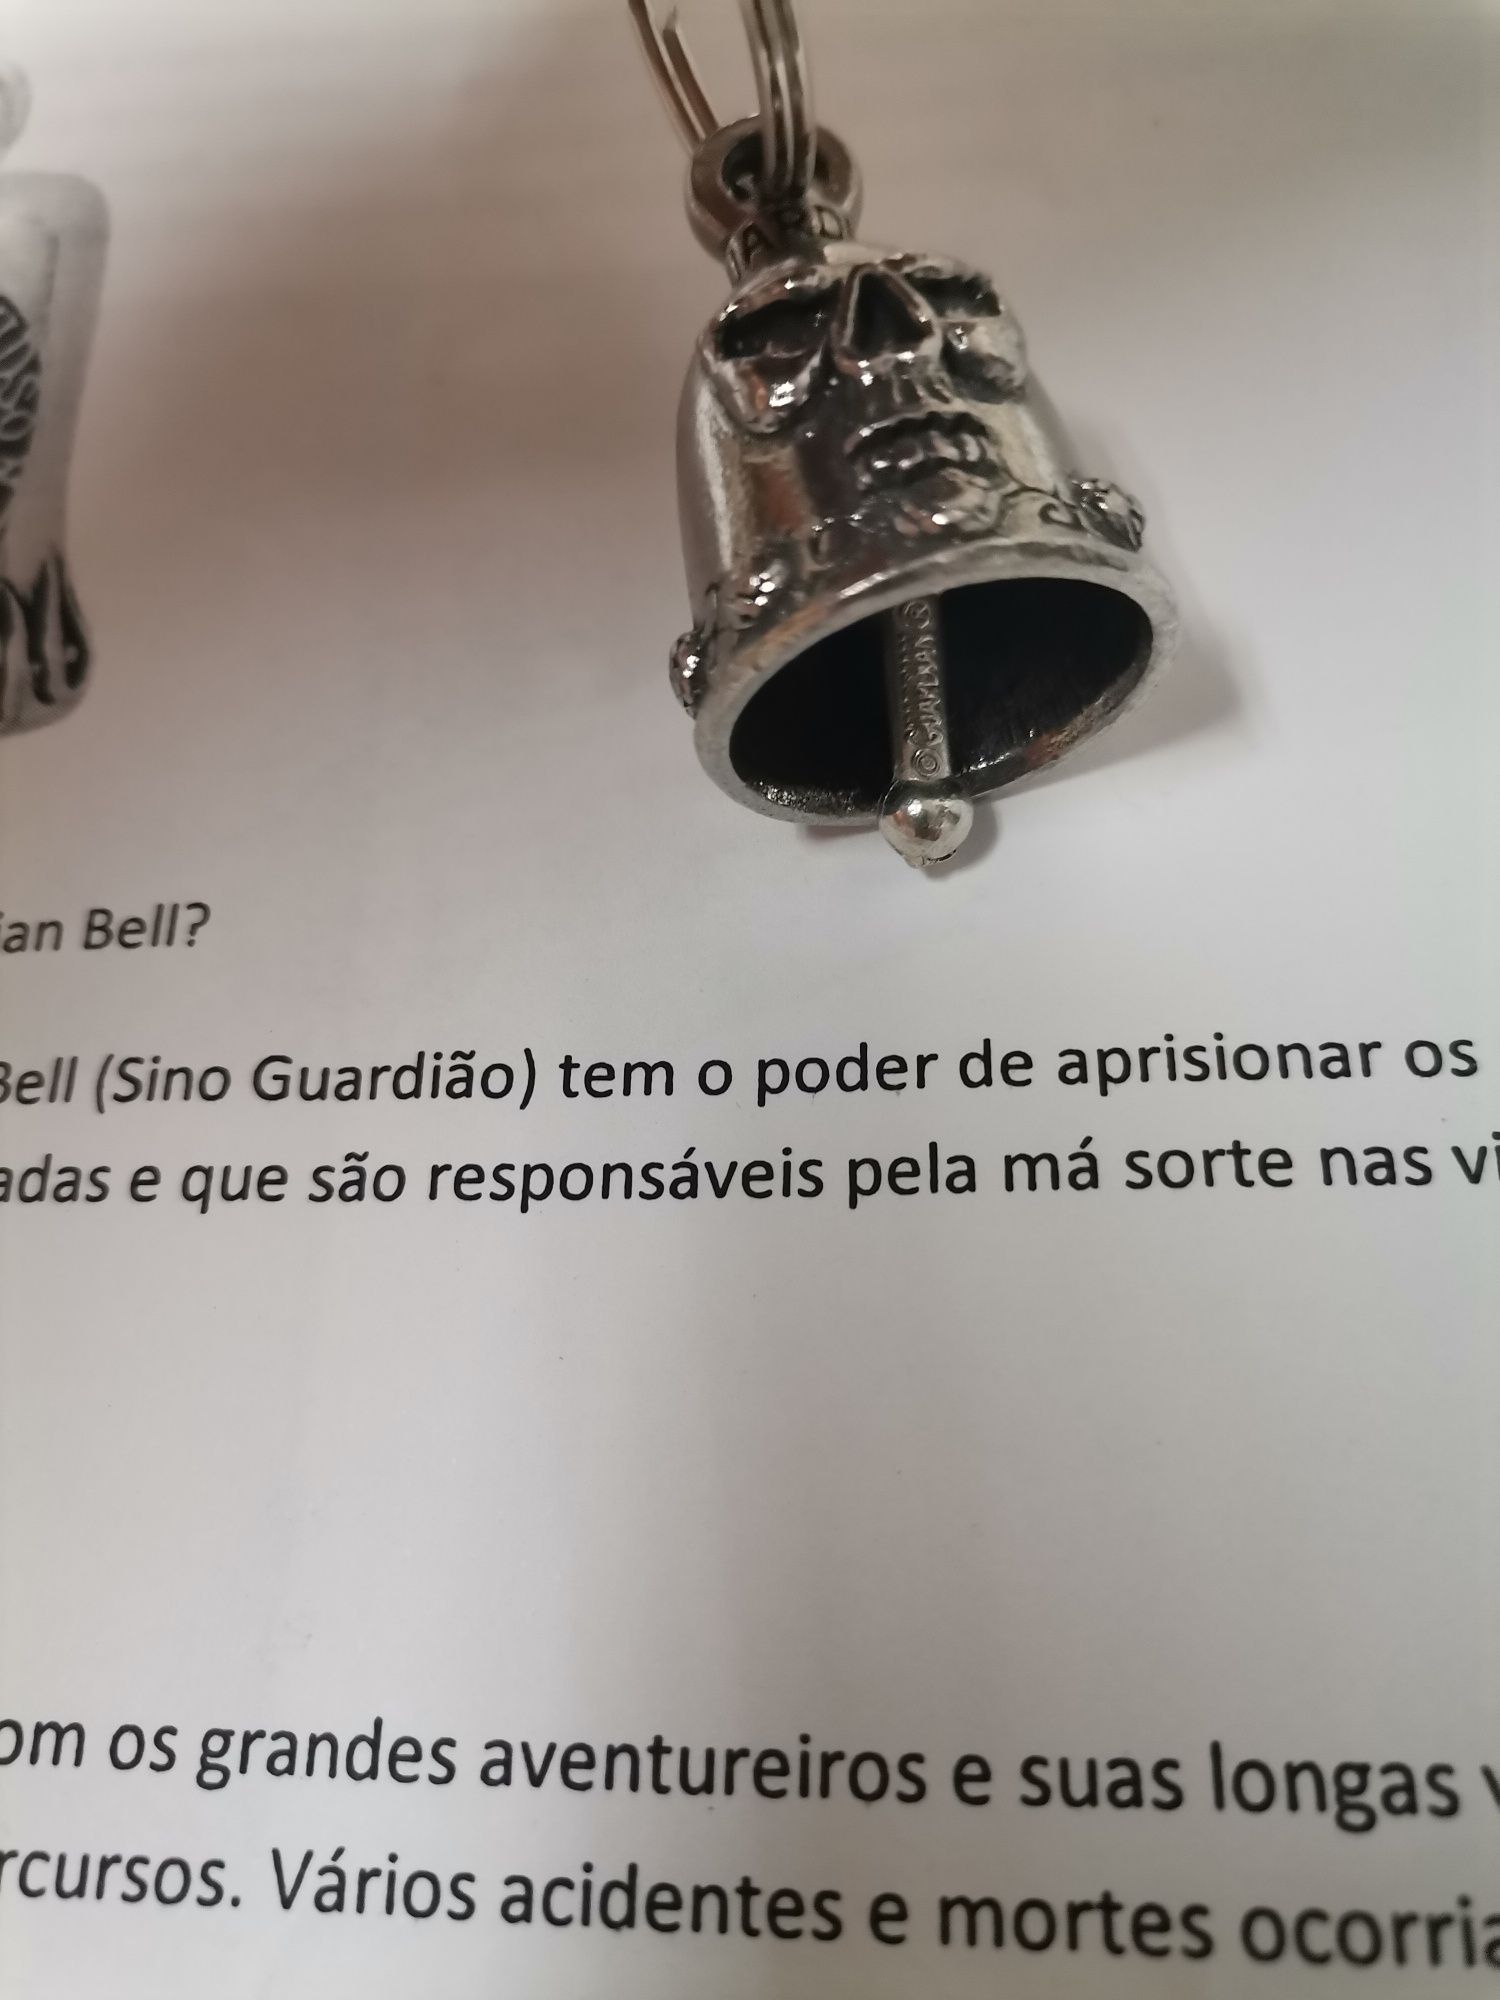 Guardian Bell (sino guardião)